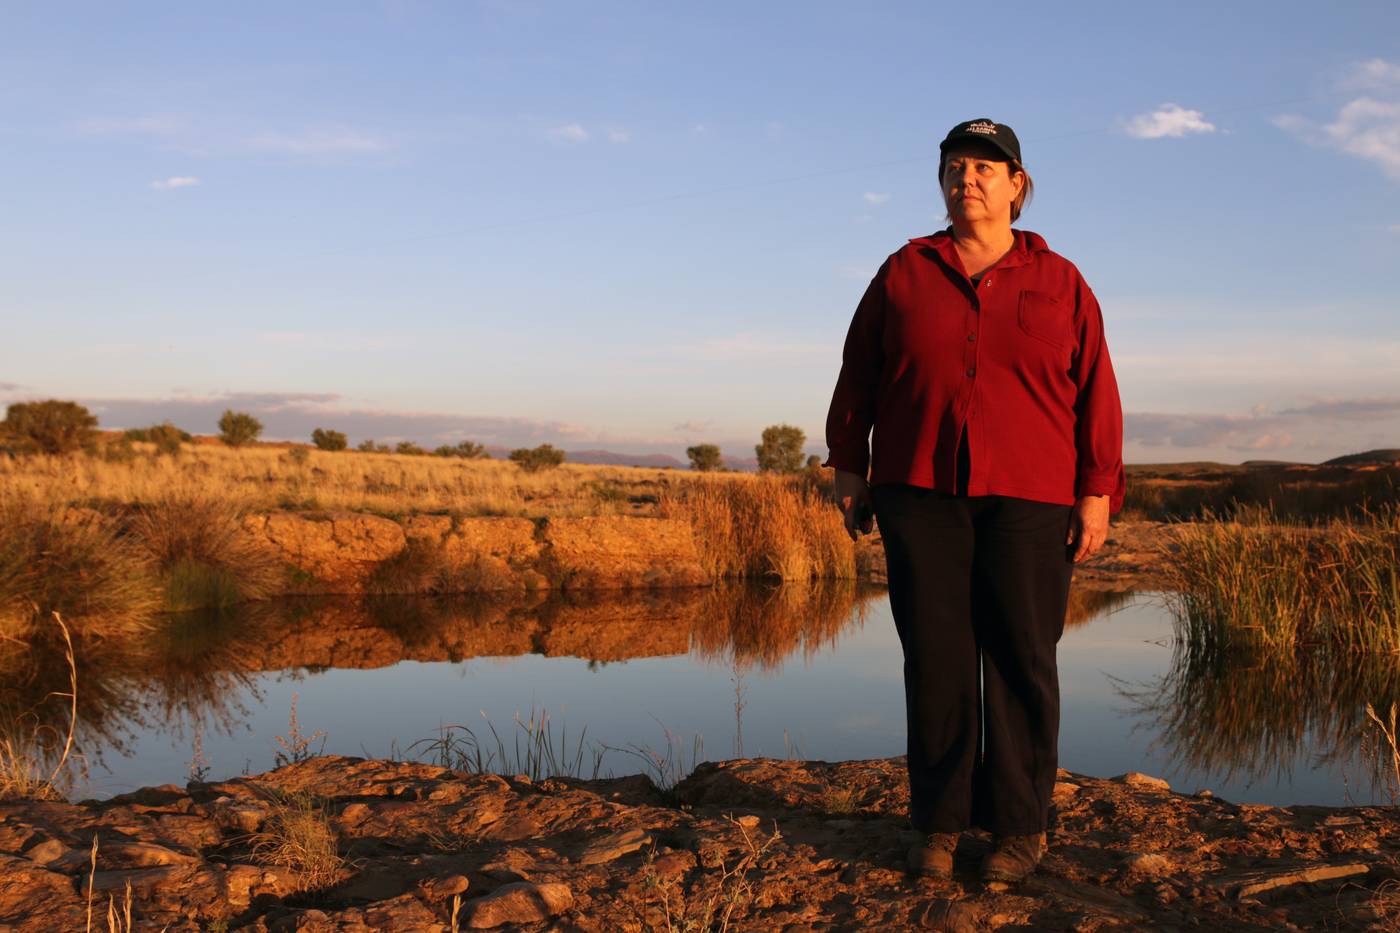 Nuclear waste land: Indigenous Australians fight radioactive dump